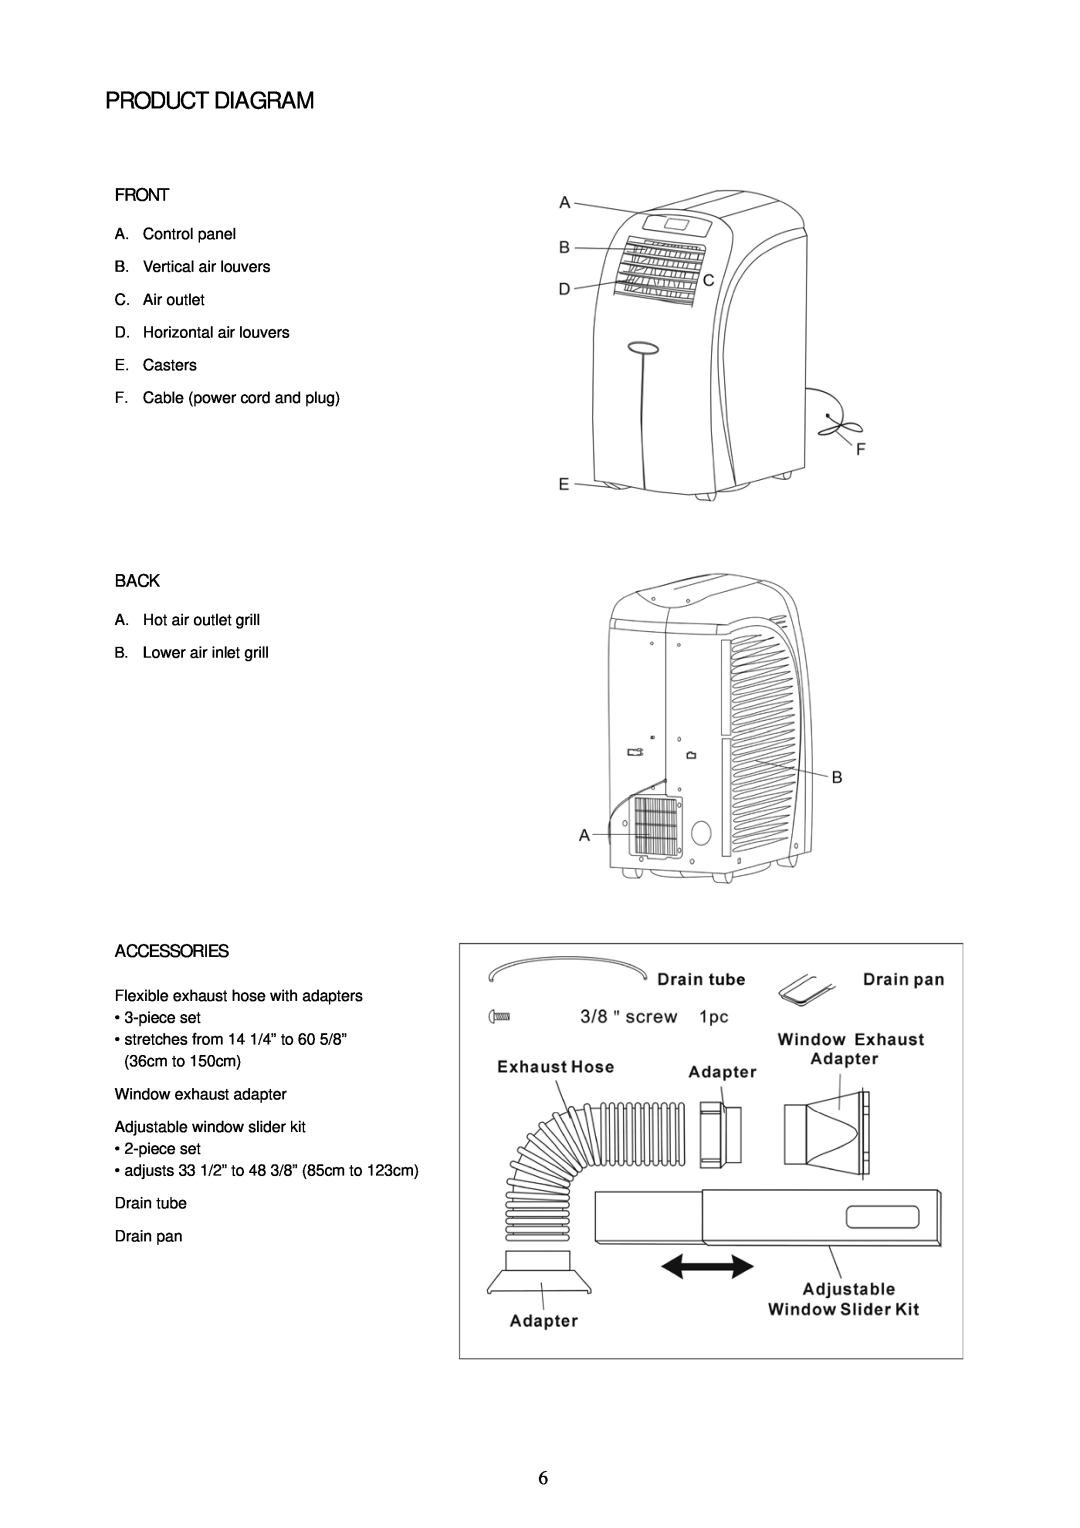 Soleus Air PH1-10R-03, PH1-12R-03, PH1-14R-03 owner manual Product Diagram, Front, Back, Accessories 